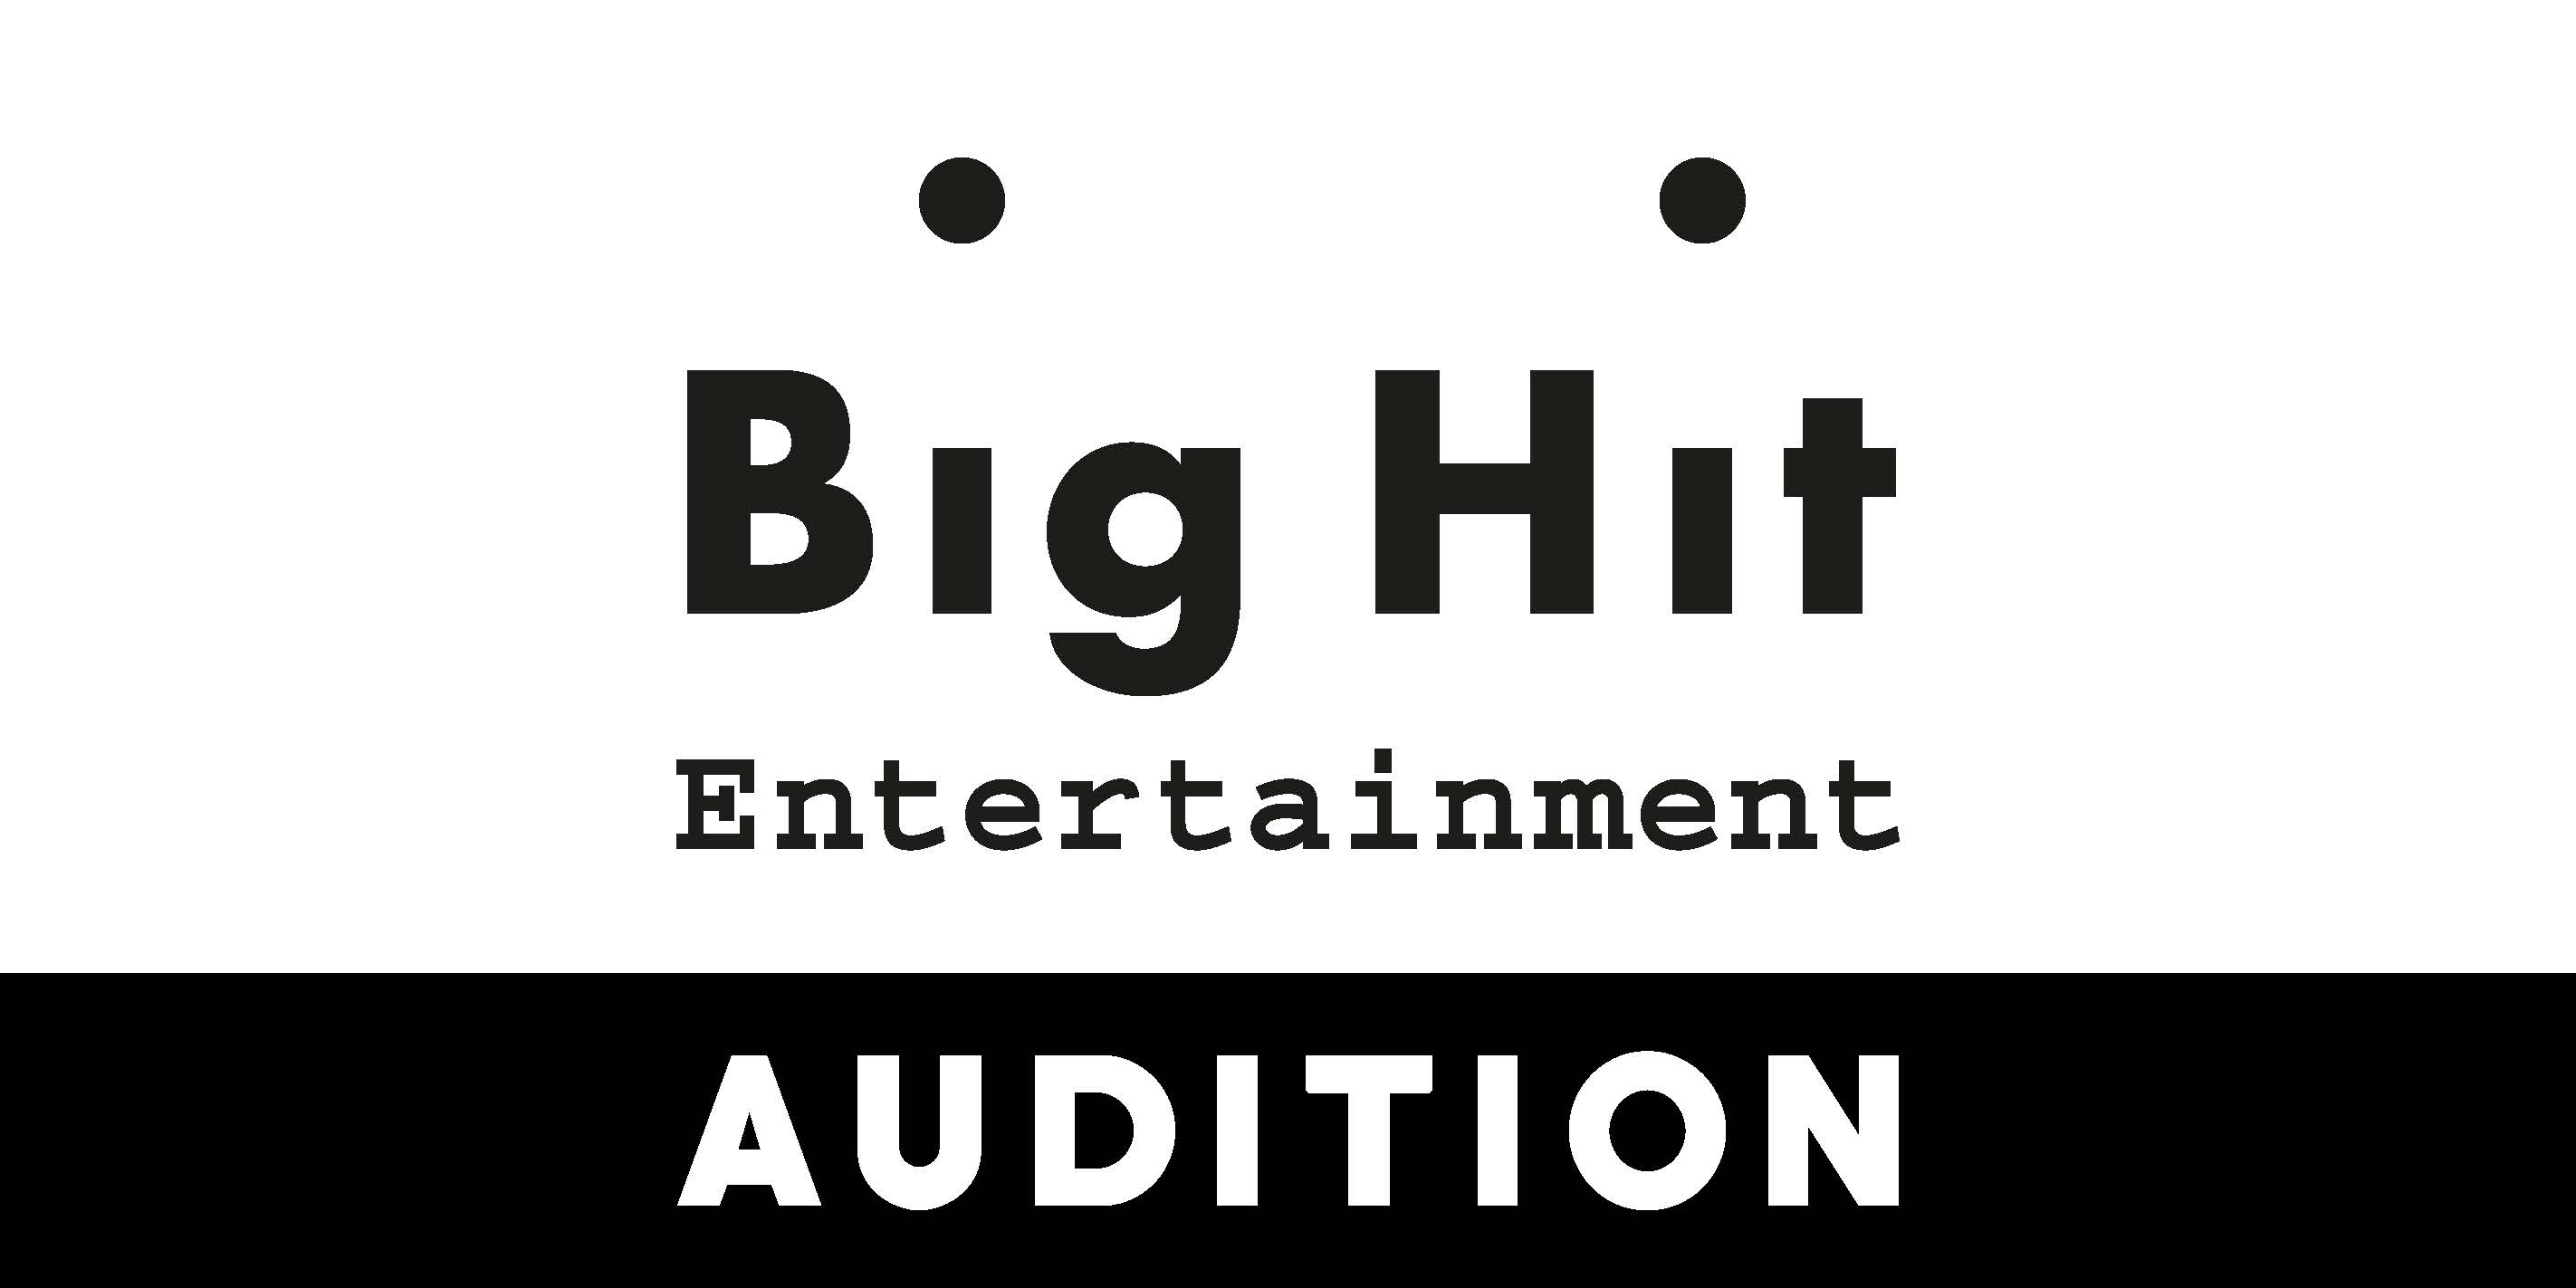 Big hit entertainment audition